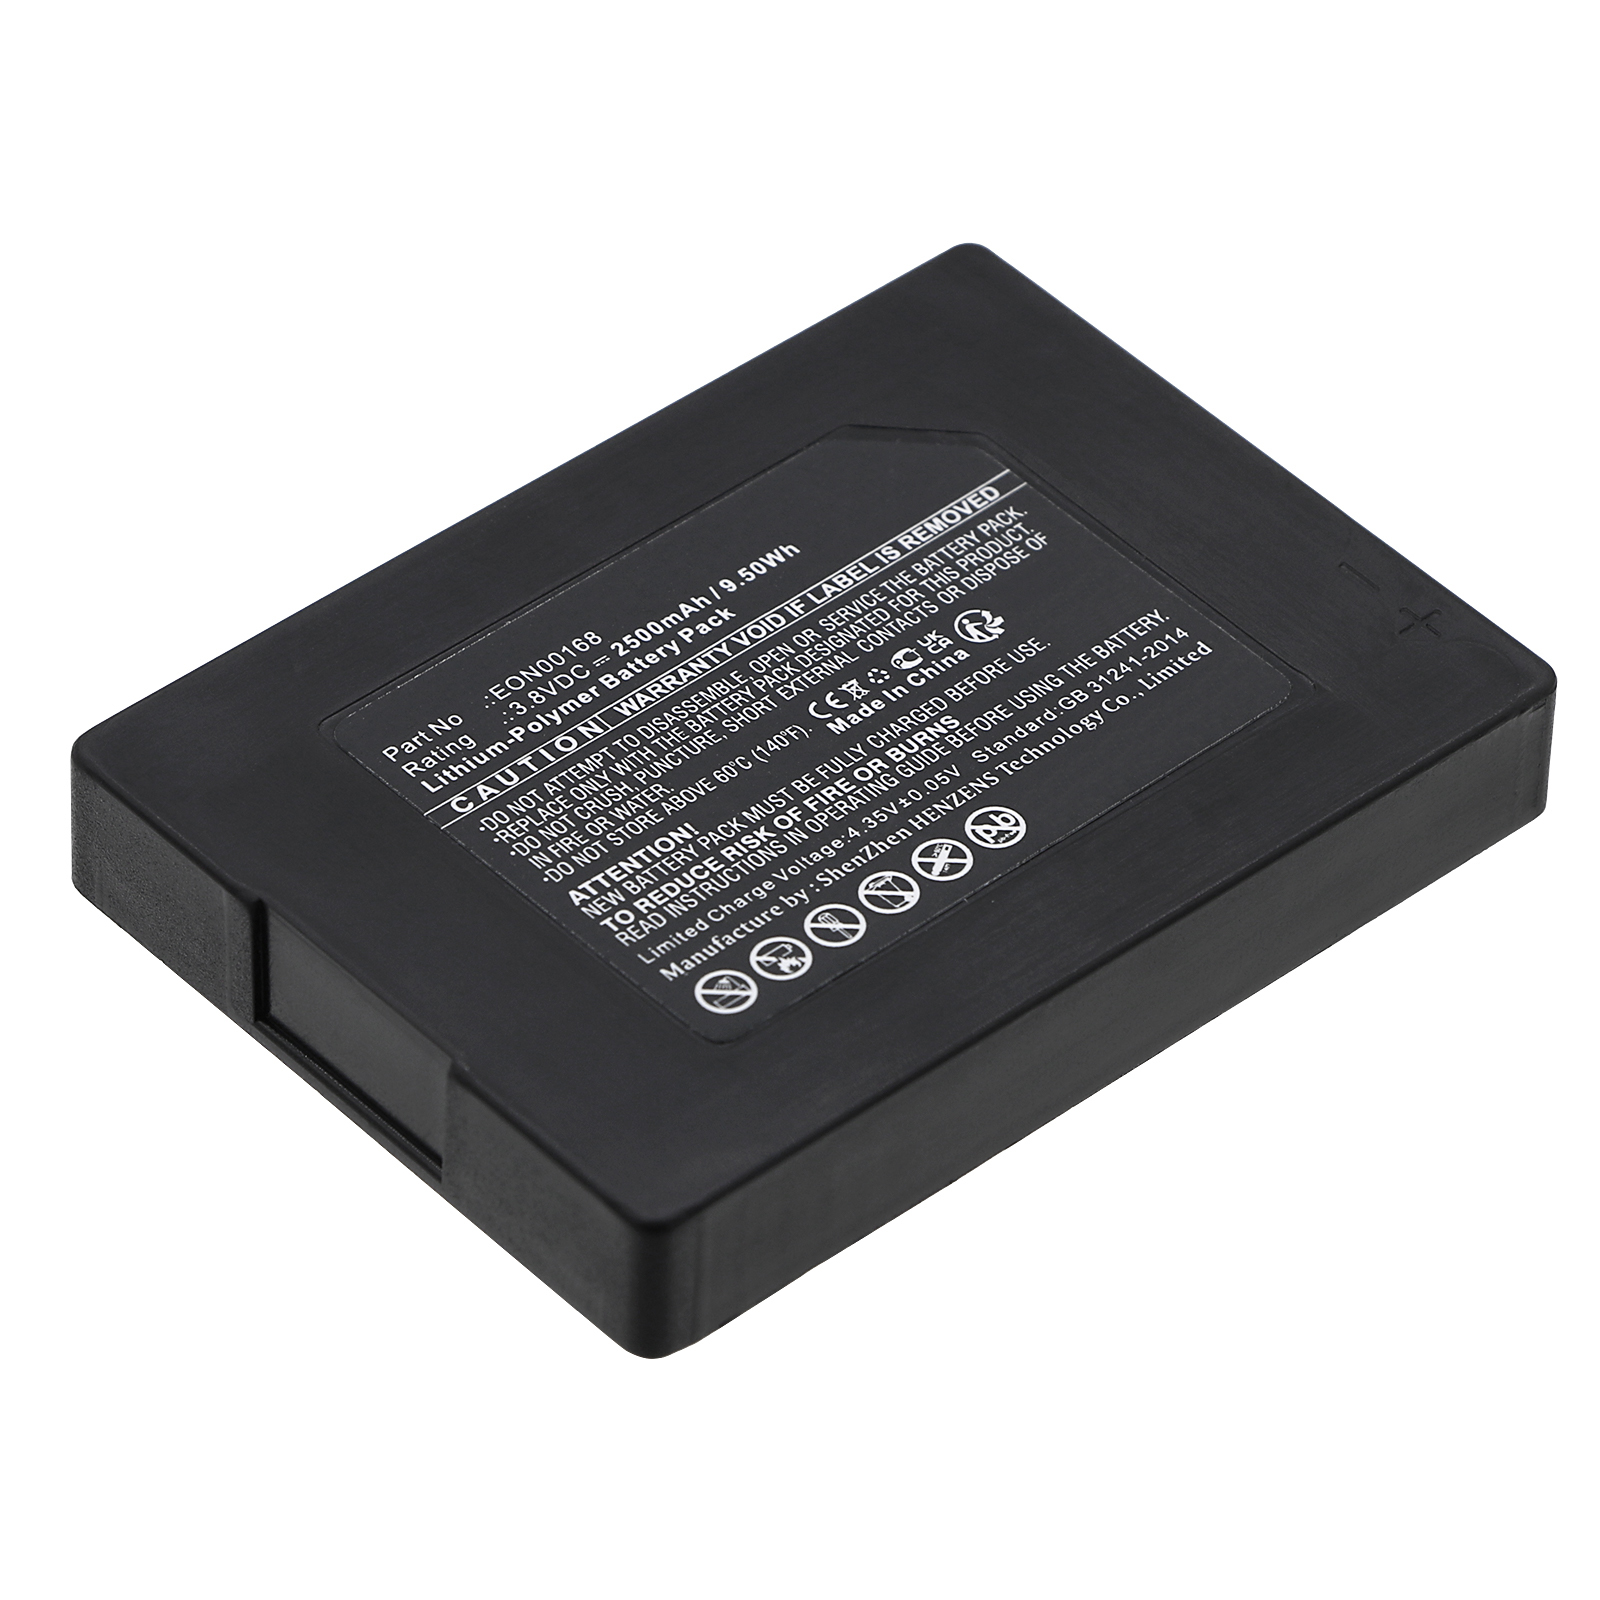 Synergy Digital Digital Camera Battery, Compatible with Pyle EON00168 Digital Camera Battery (Li-Pol, 3.8V, 2500mAh)